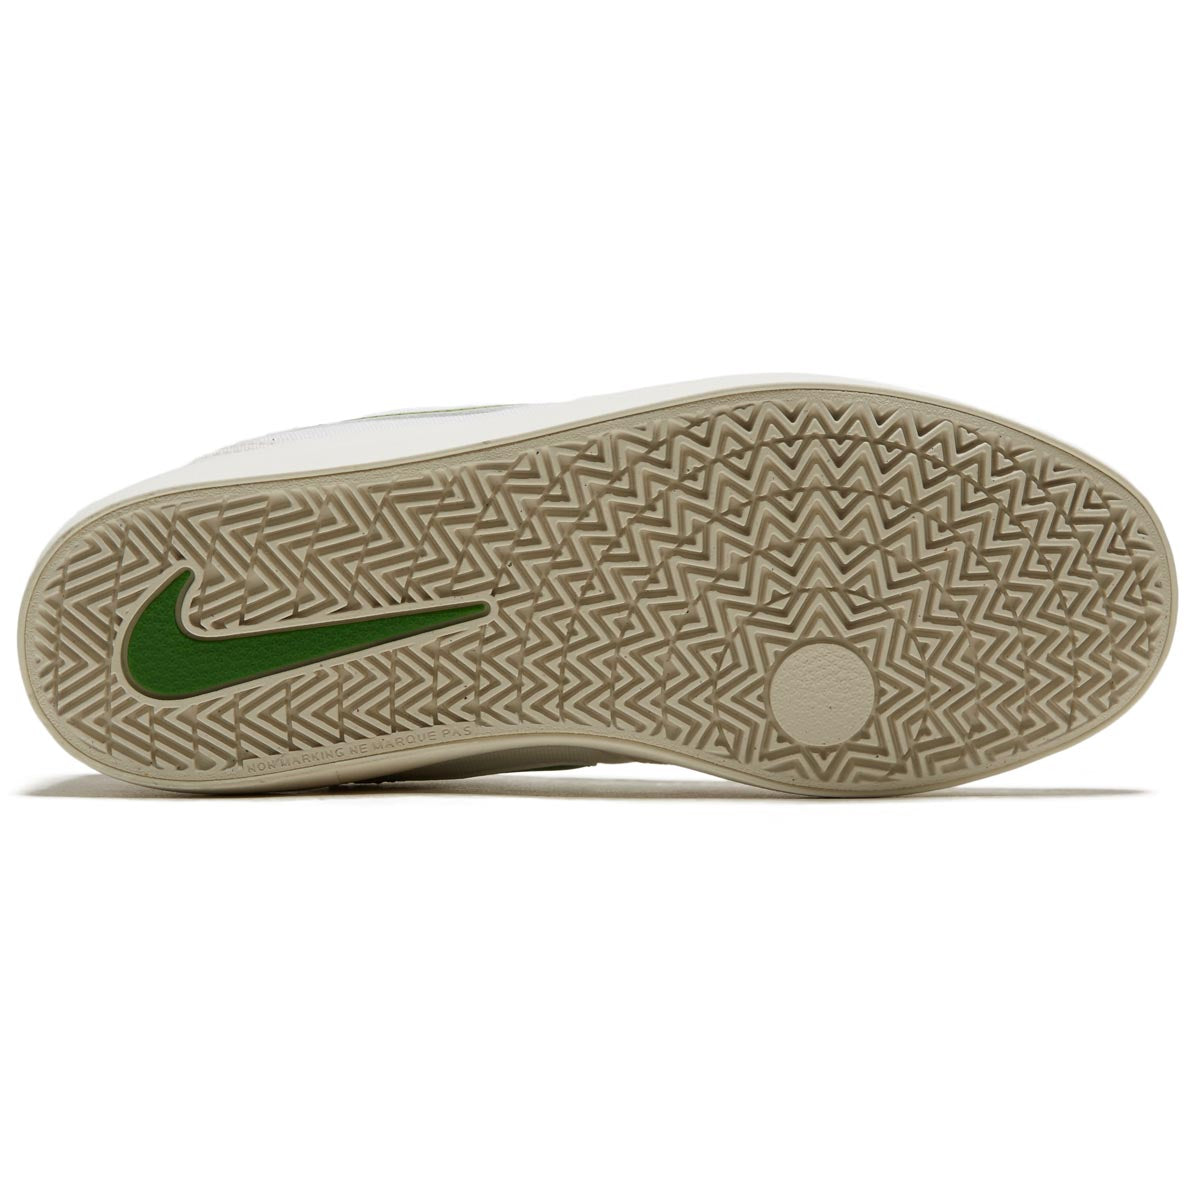 Nike SB Check Canvas Shoes - Phantom/Chlorophyll/Summit White/Sail image 4